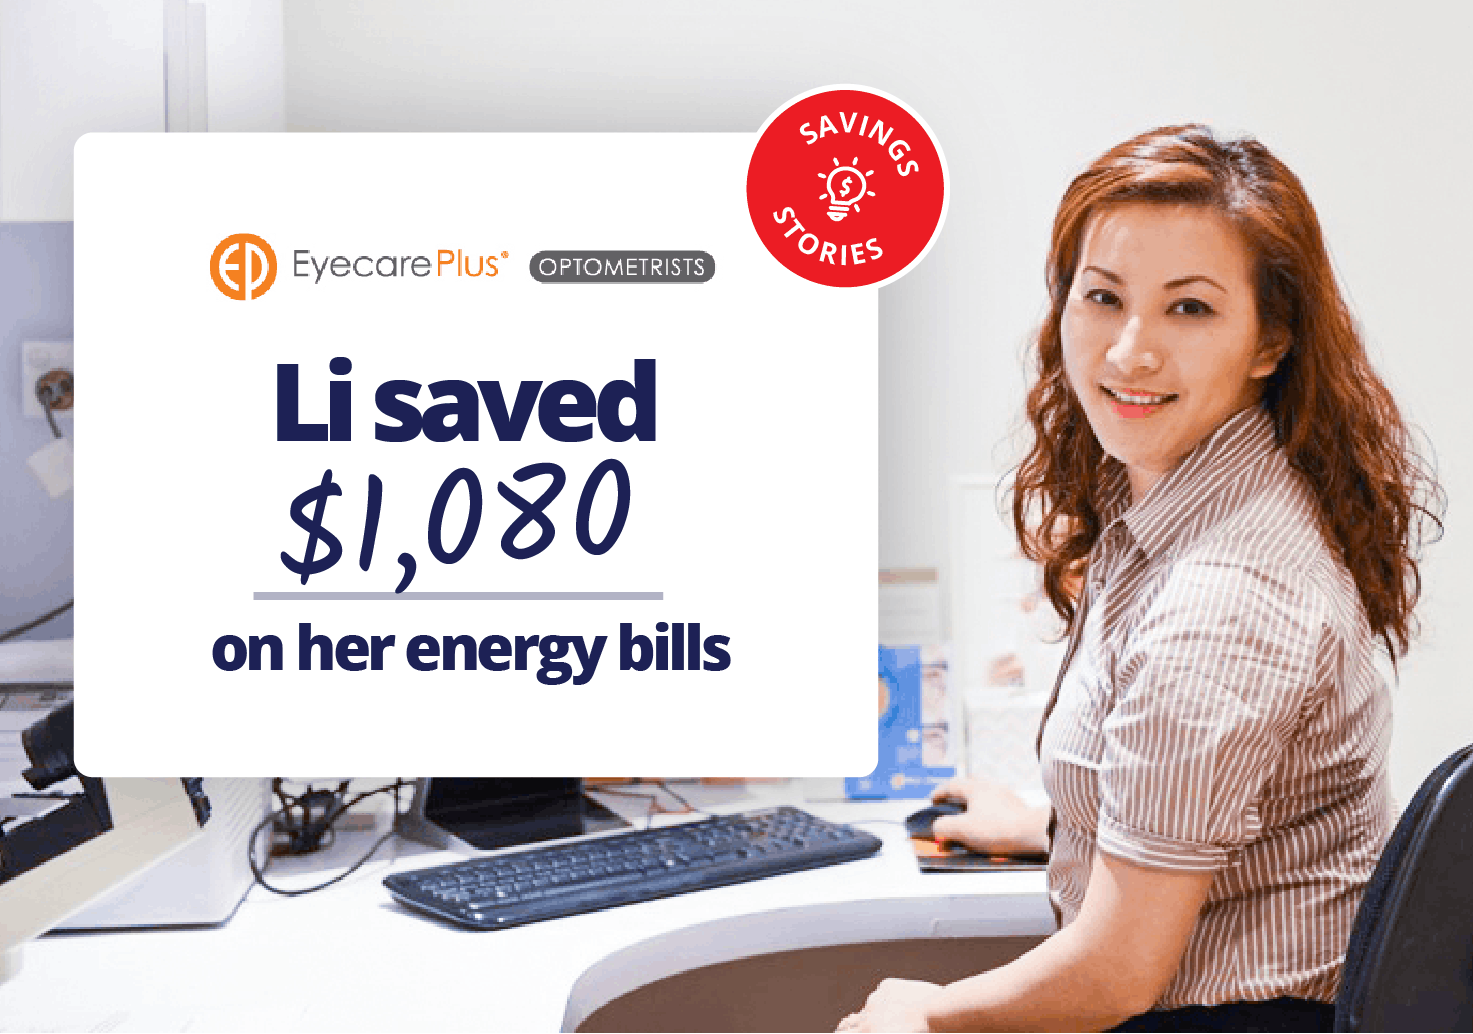 Li saved $1,080 on her energy bills